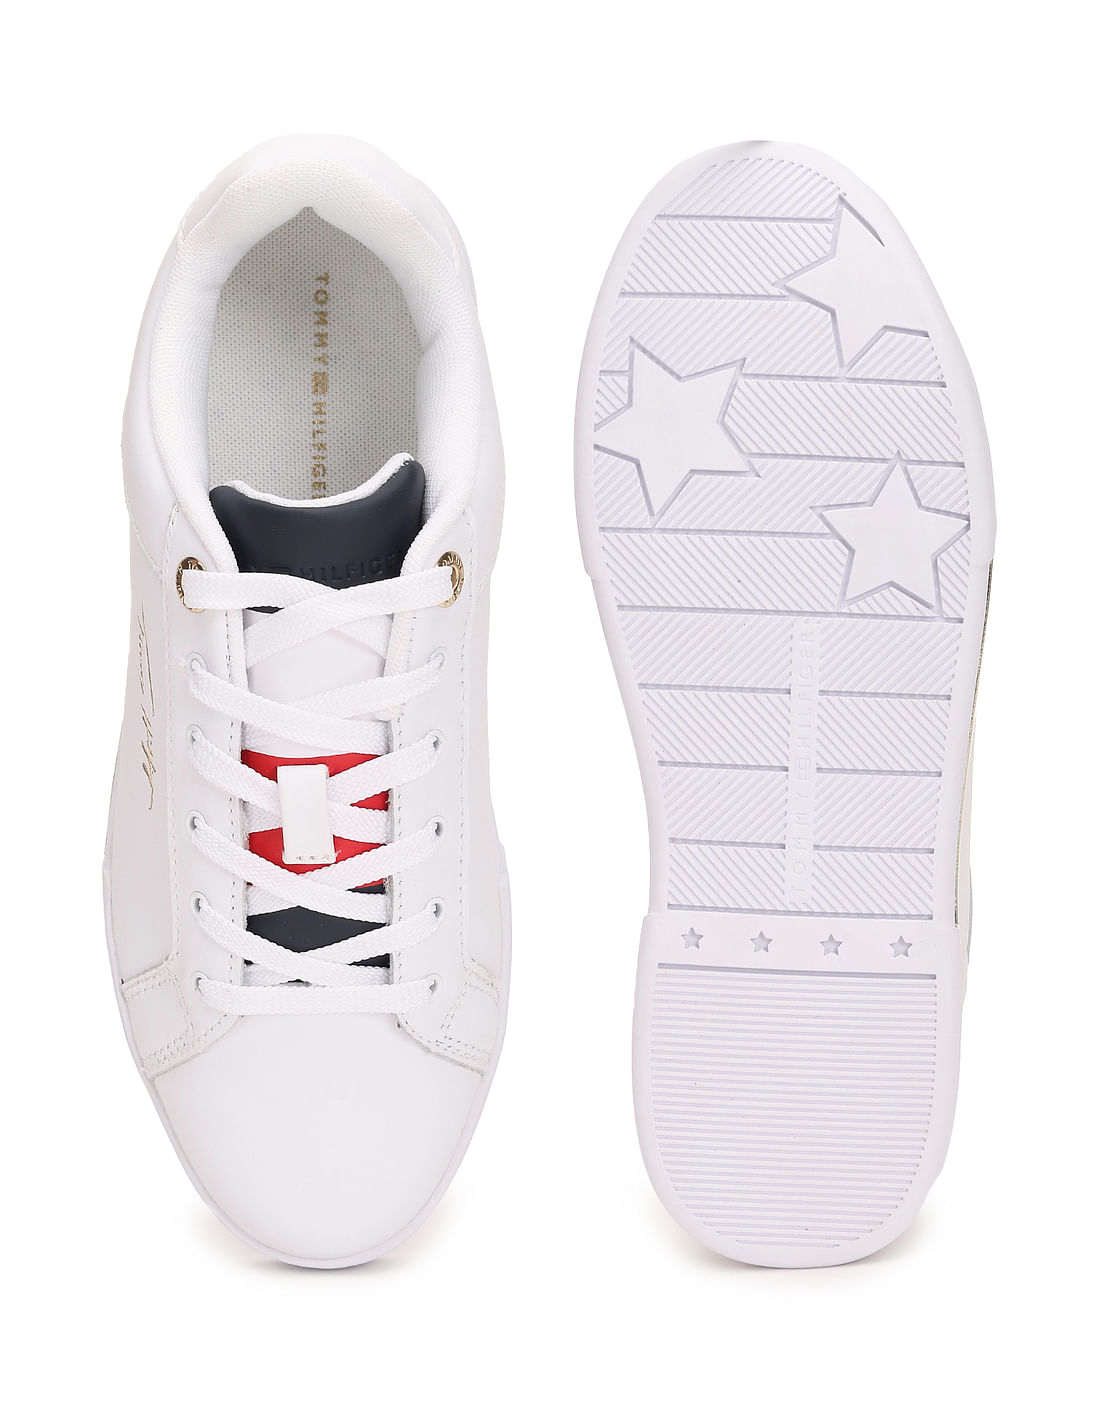 Tommy Hilfiger - Baskets Femme Signature Sneaker 5015 White